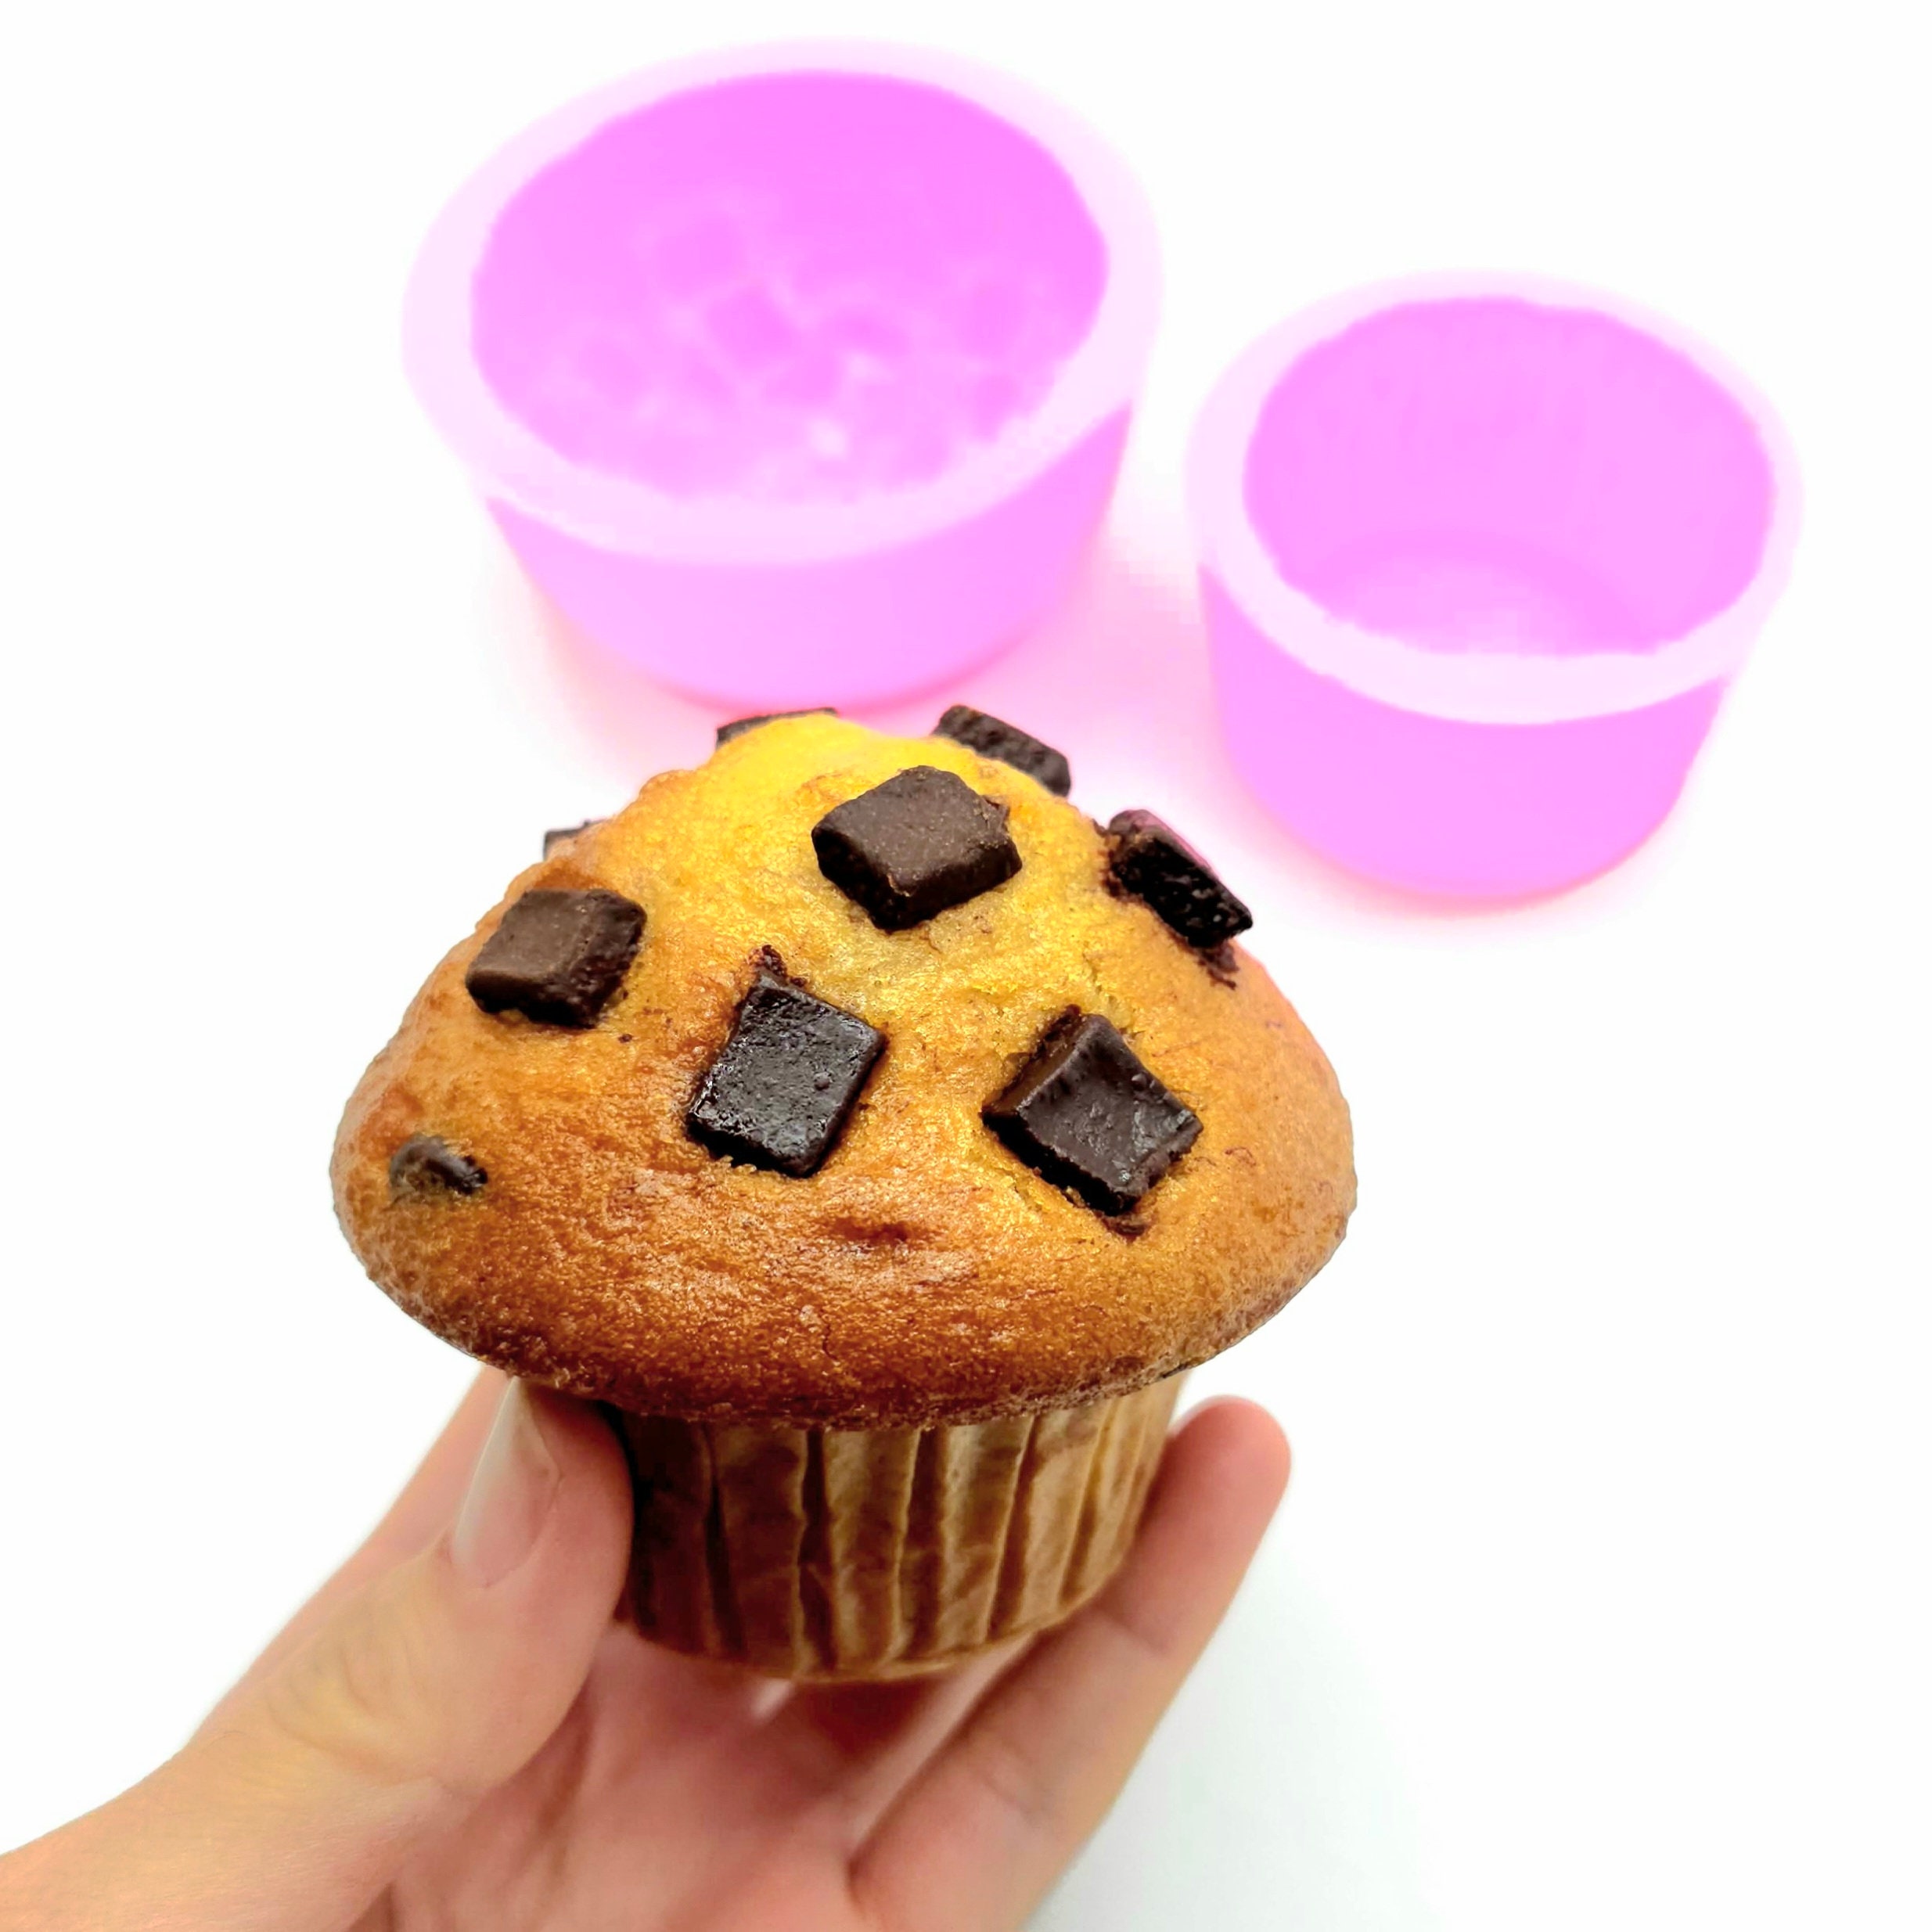 12 Cavity Square Silicone Mold Non-stick Perfect for Cakes Cupcake  Cornbread Muffin Baking Handmade Soap Making Mould BPA Free